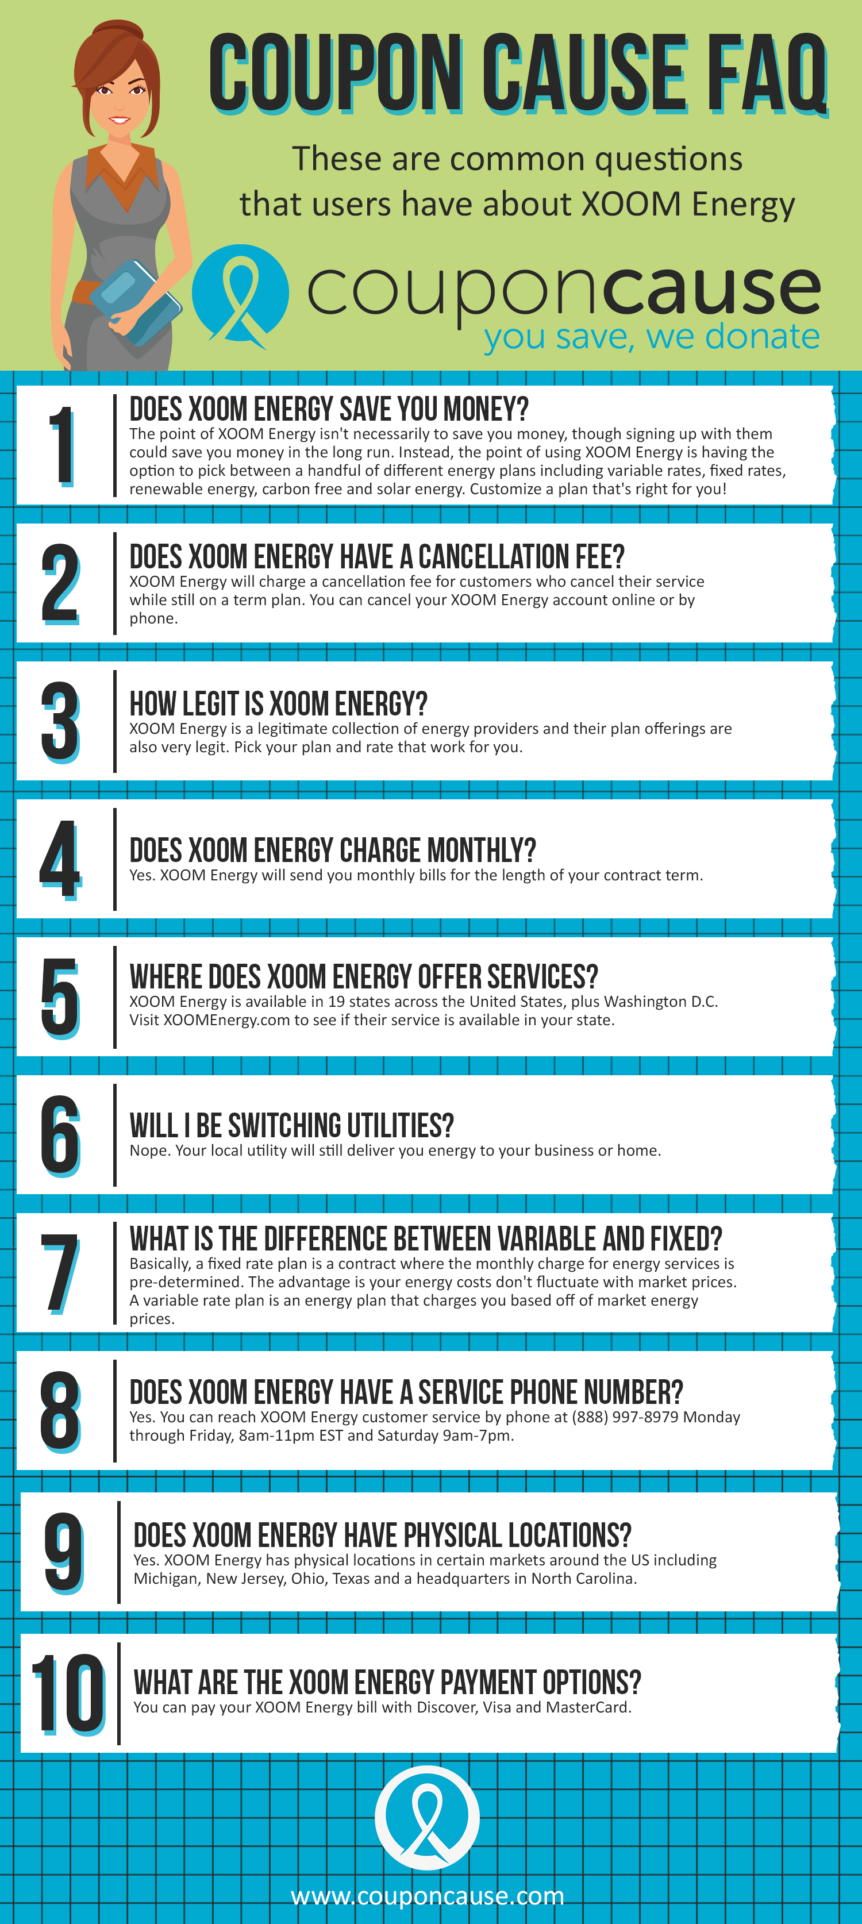 XOOM Energy Coupon Cause FAQ (C.C. FAQ)